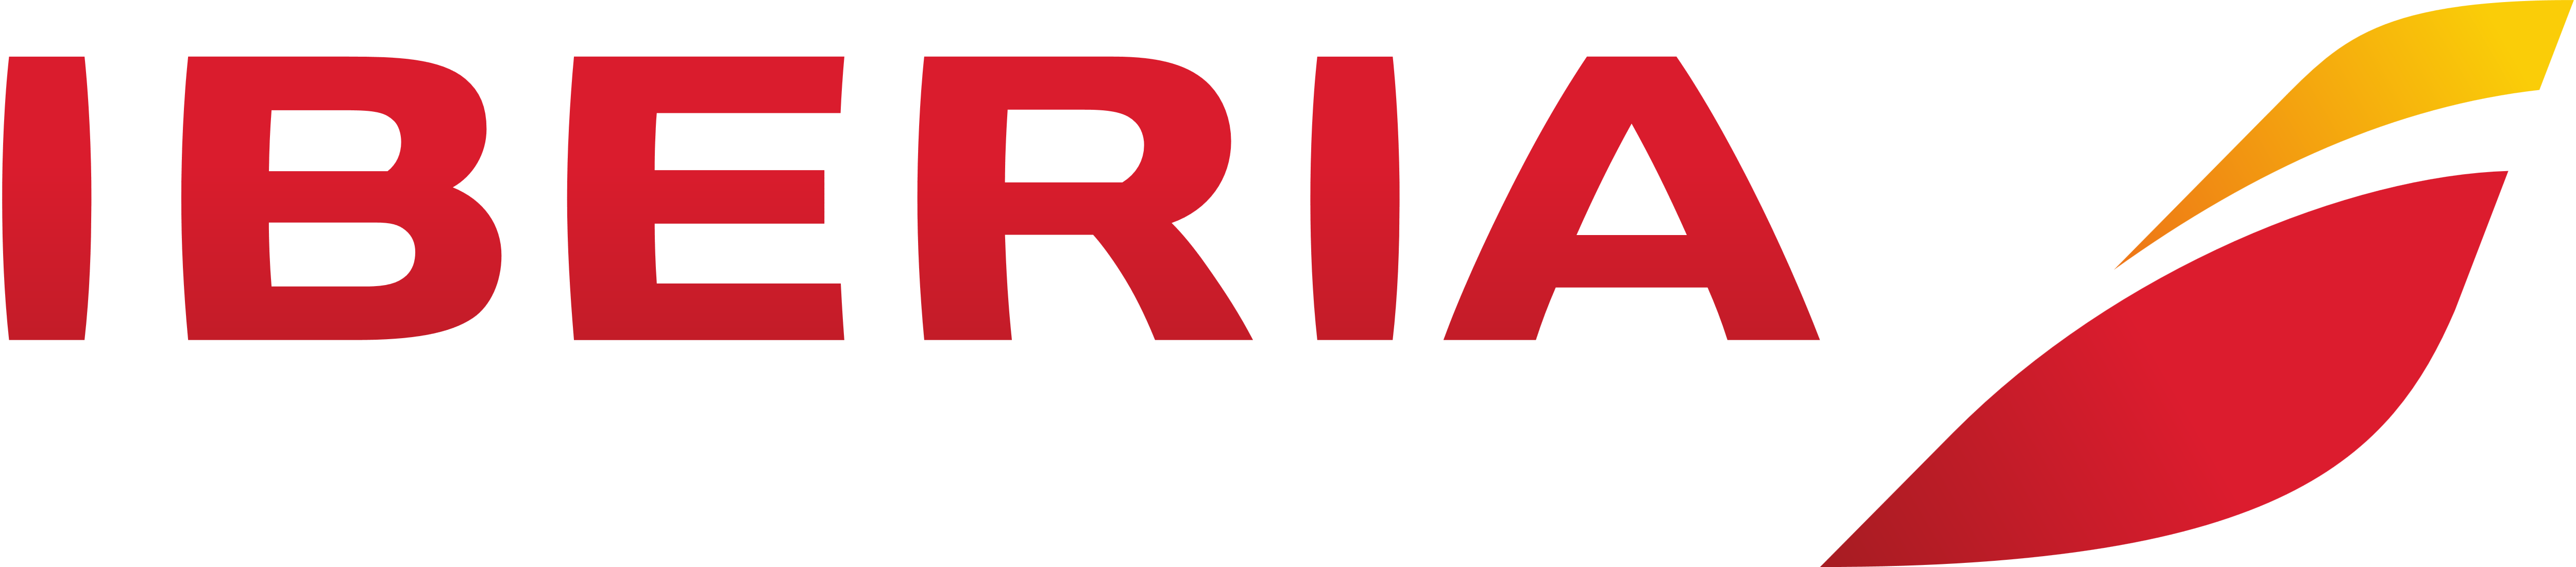 Iberia Logo Wallpaper